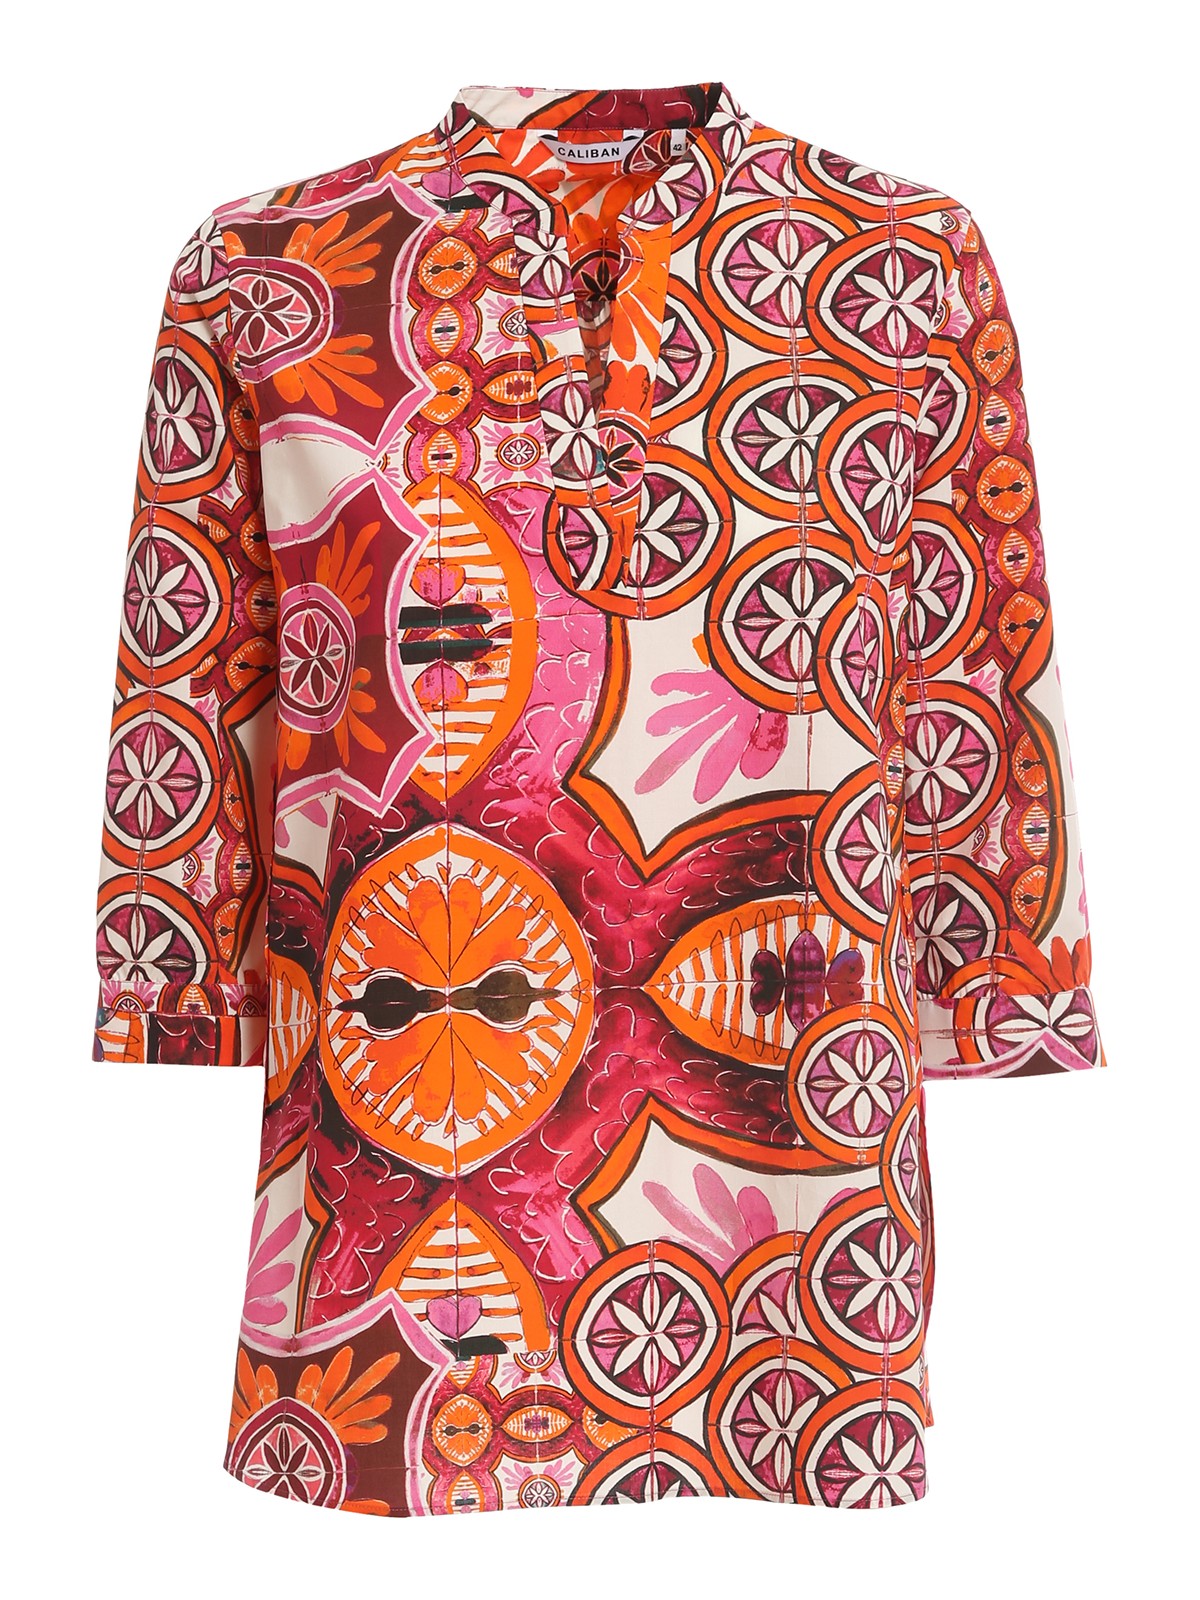 Blouses Caliban - Patterned blouse - PMUYJTFH1 | Shop online at iKRIX